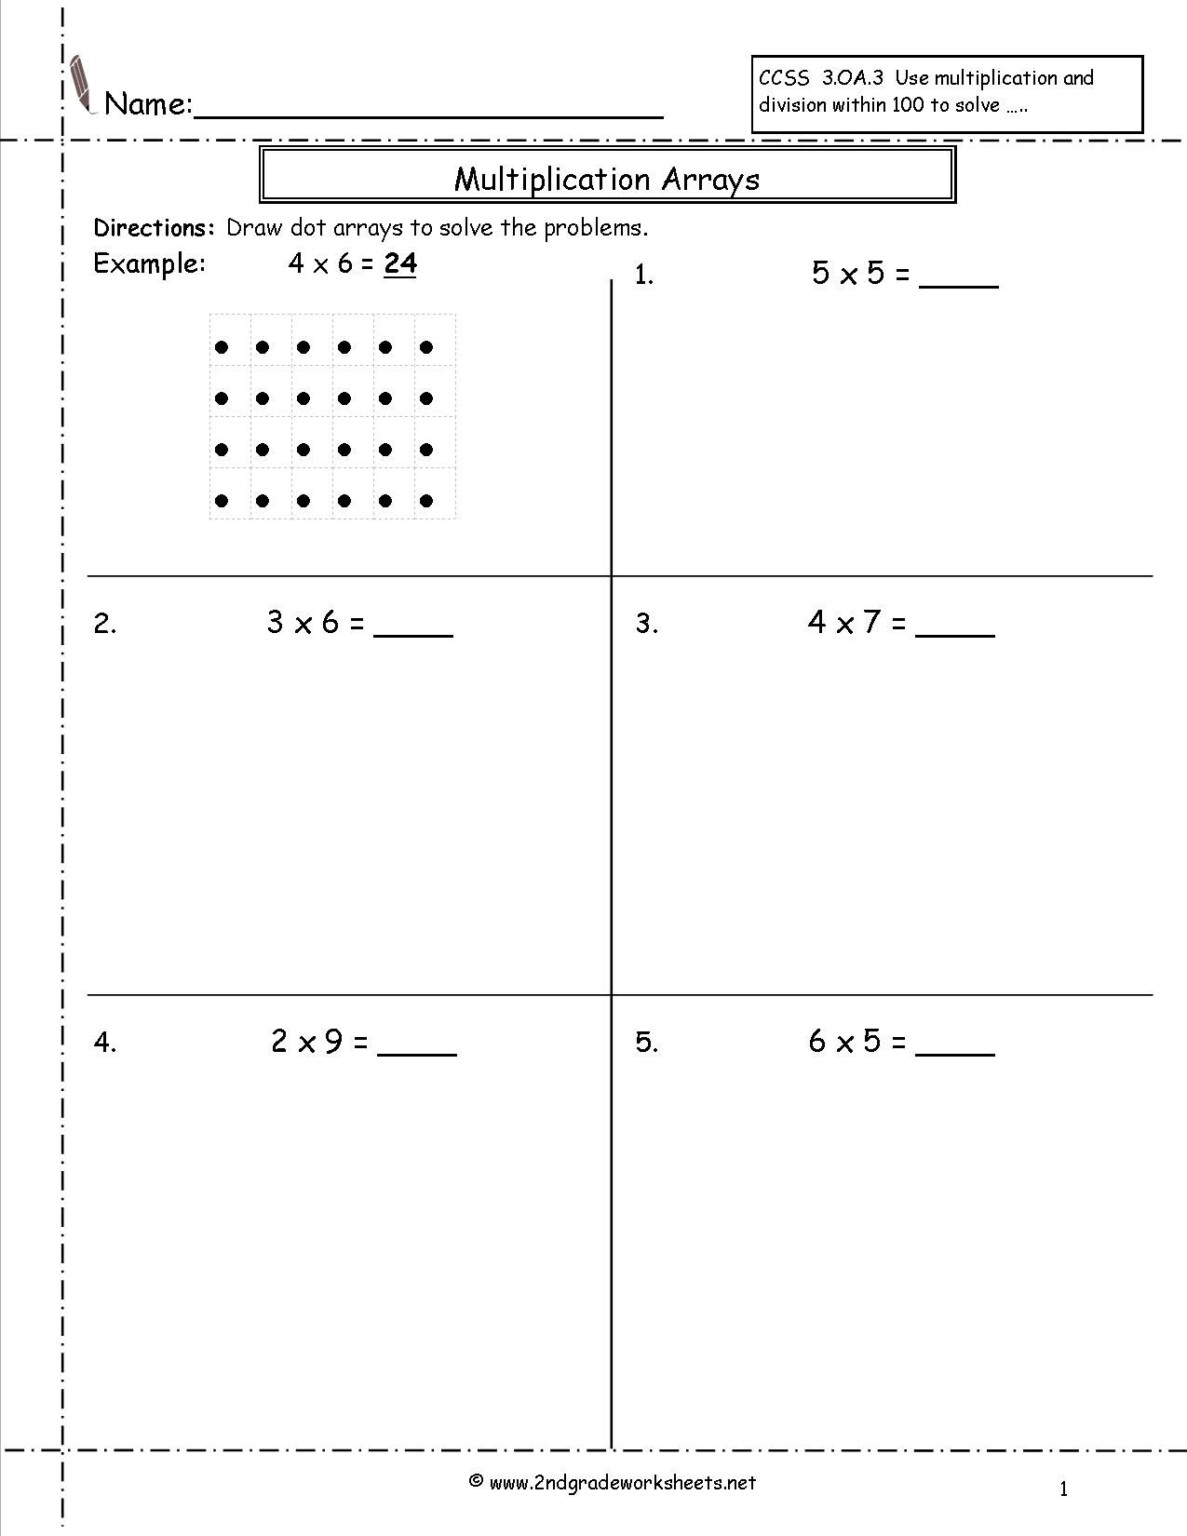 multiplication-array-worksheets-array-worksheets-math-throughout-worksheets-multiplication